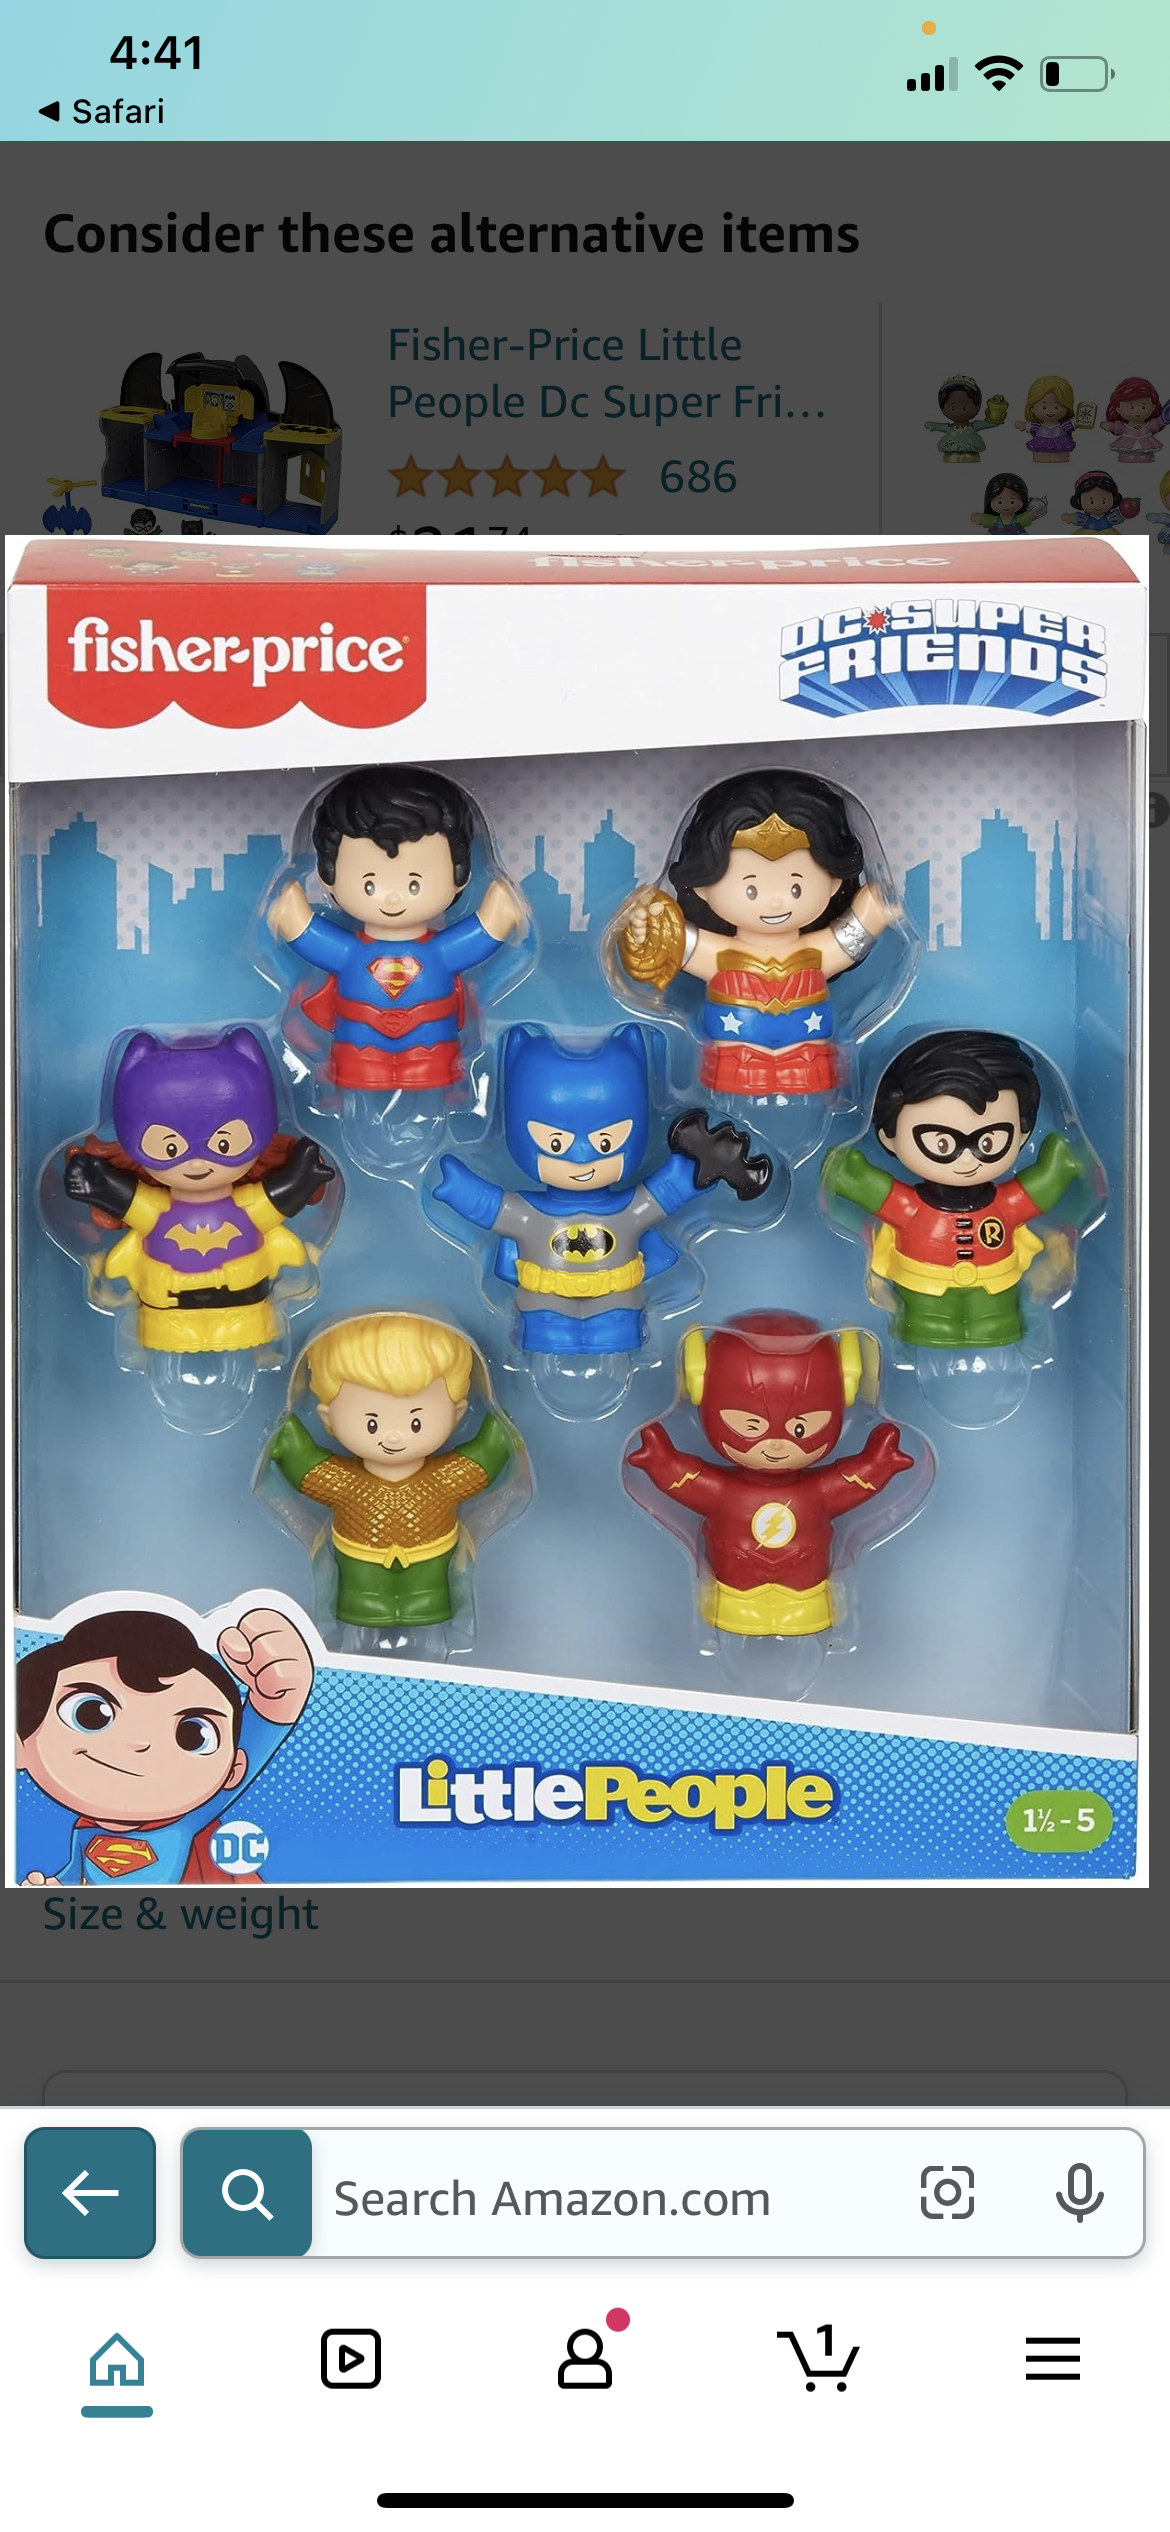 Little People - DC SuperHero friends - set of 7. 45242